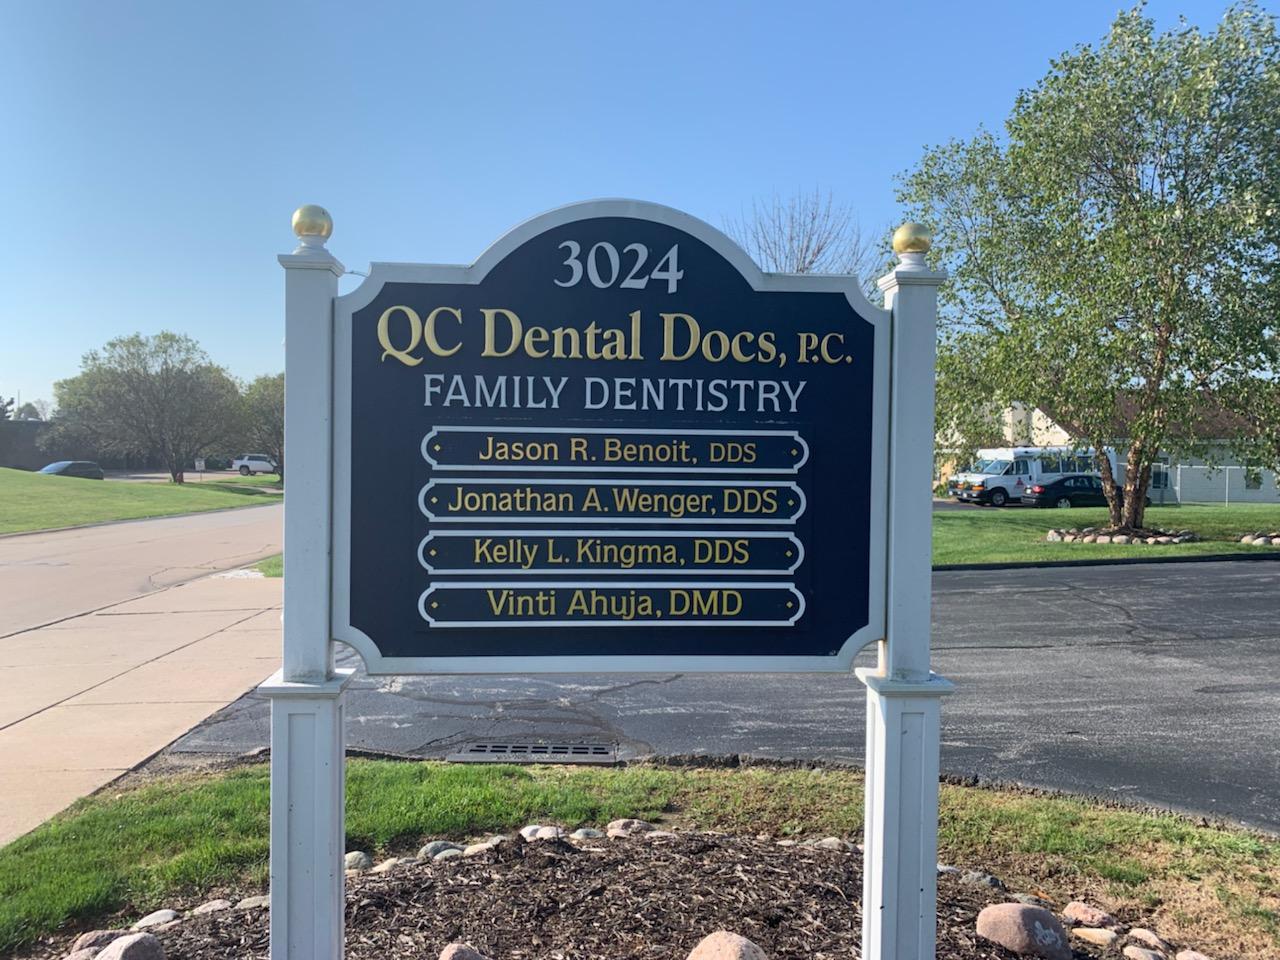 Exterior outdoor signage for QC Dental Docs, P.C.